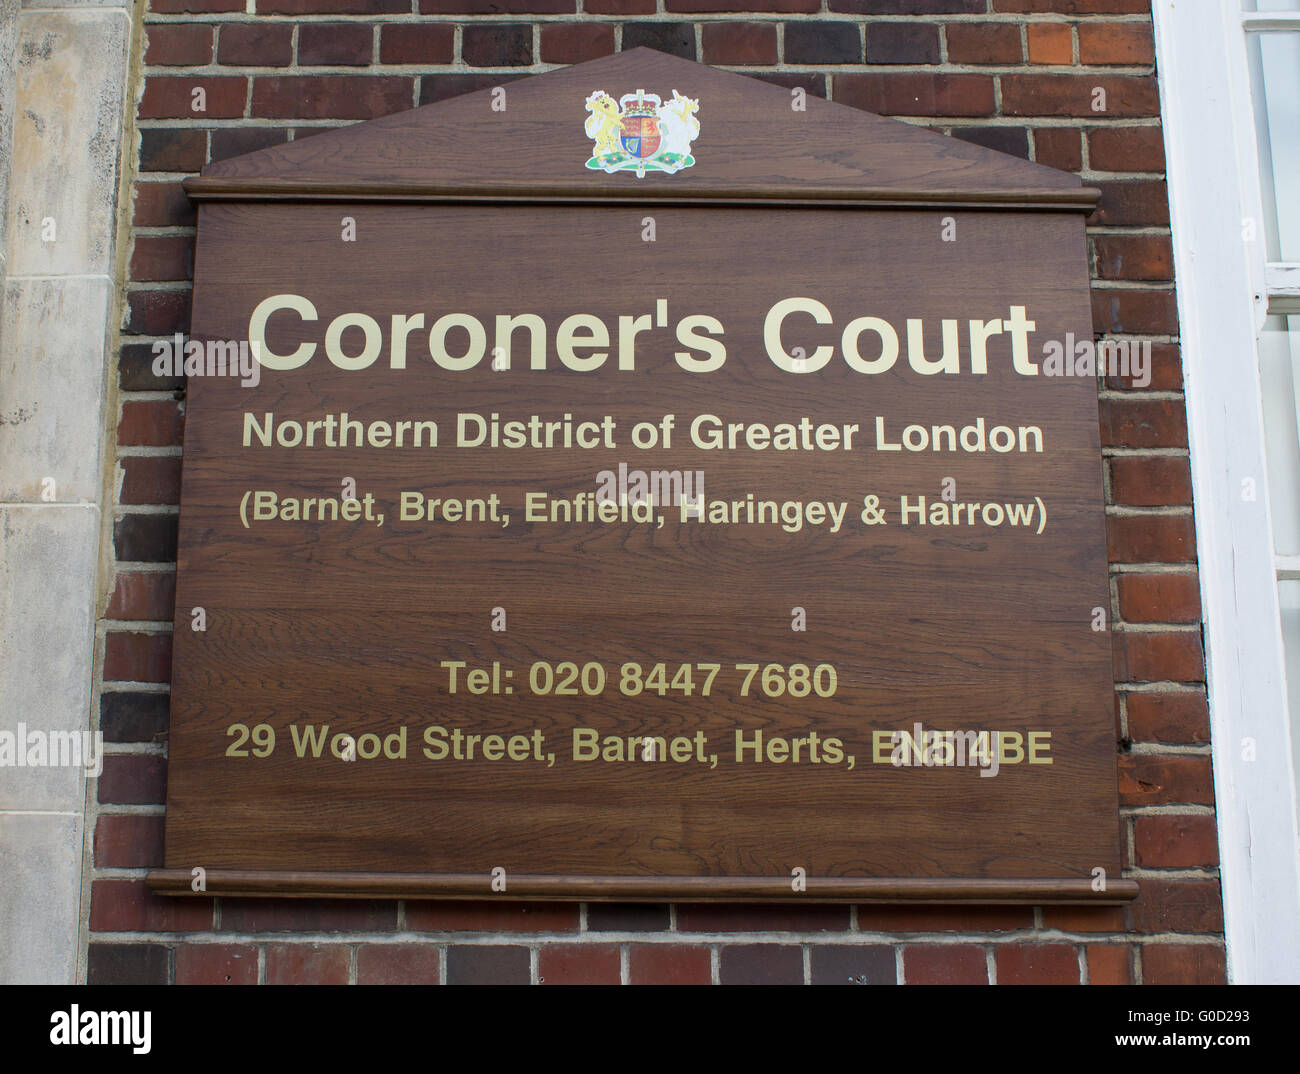 Coroner's Court sign in Barnet, North London, UK Stock Photo